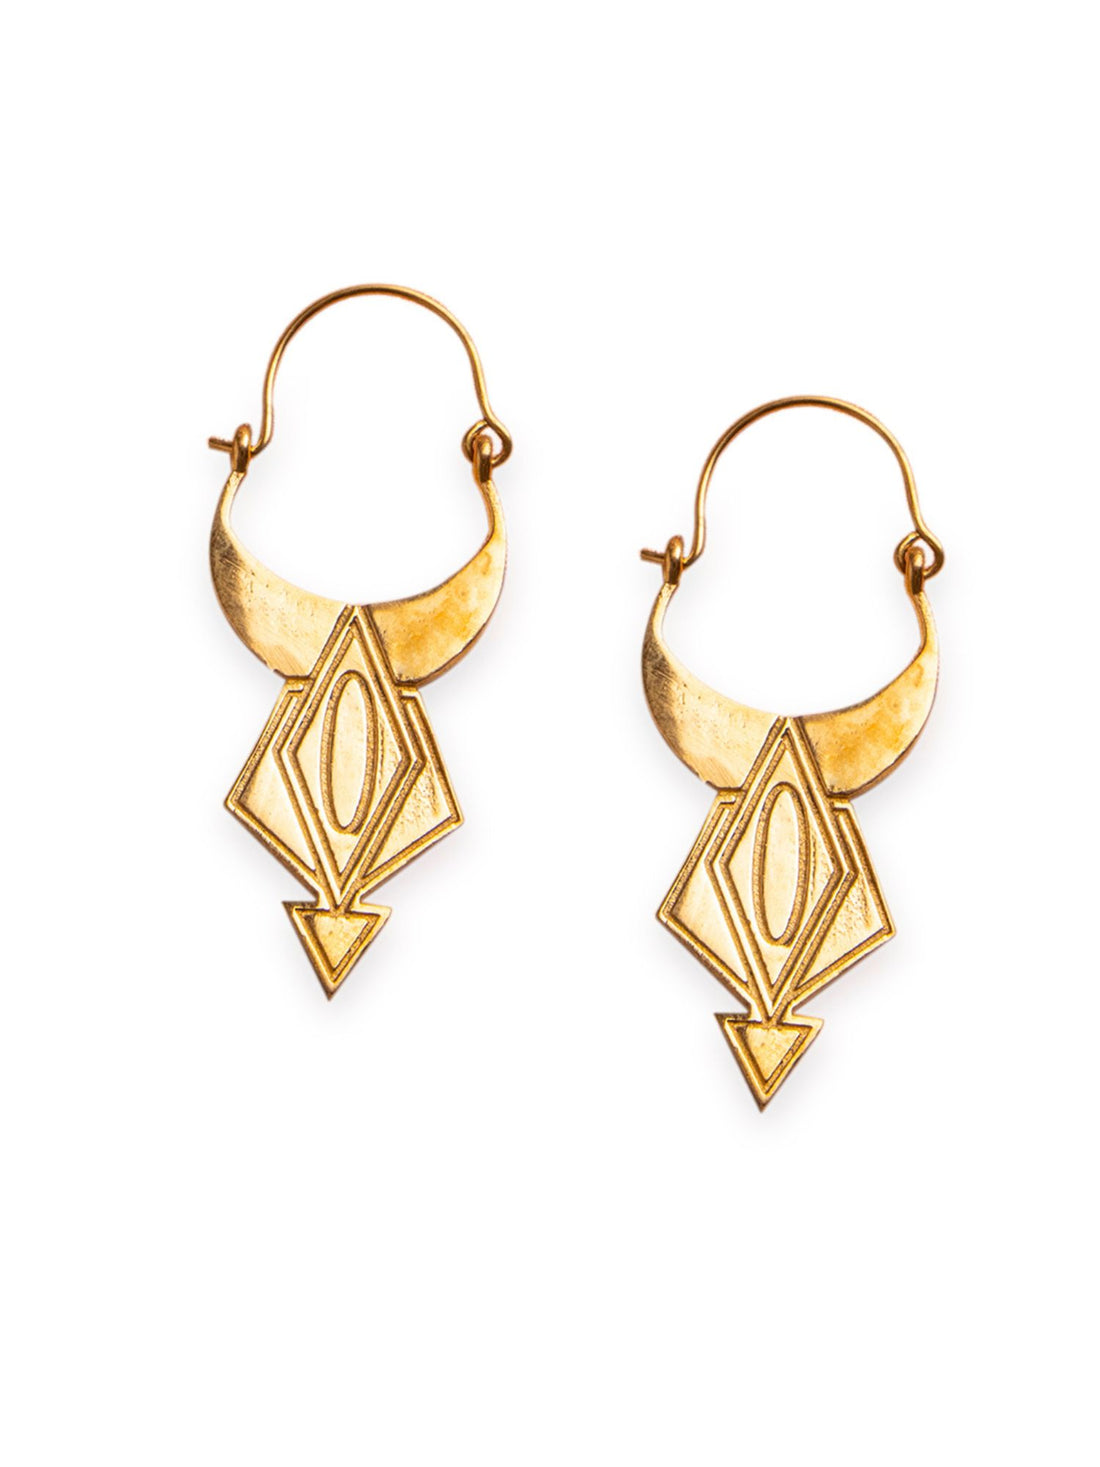 Daily Wear Hoop Earrings - Minimal Gold and Silver-Plated Brass Earrings By Studio One Love